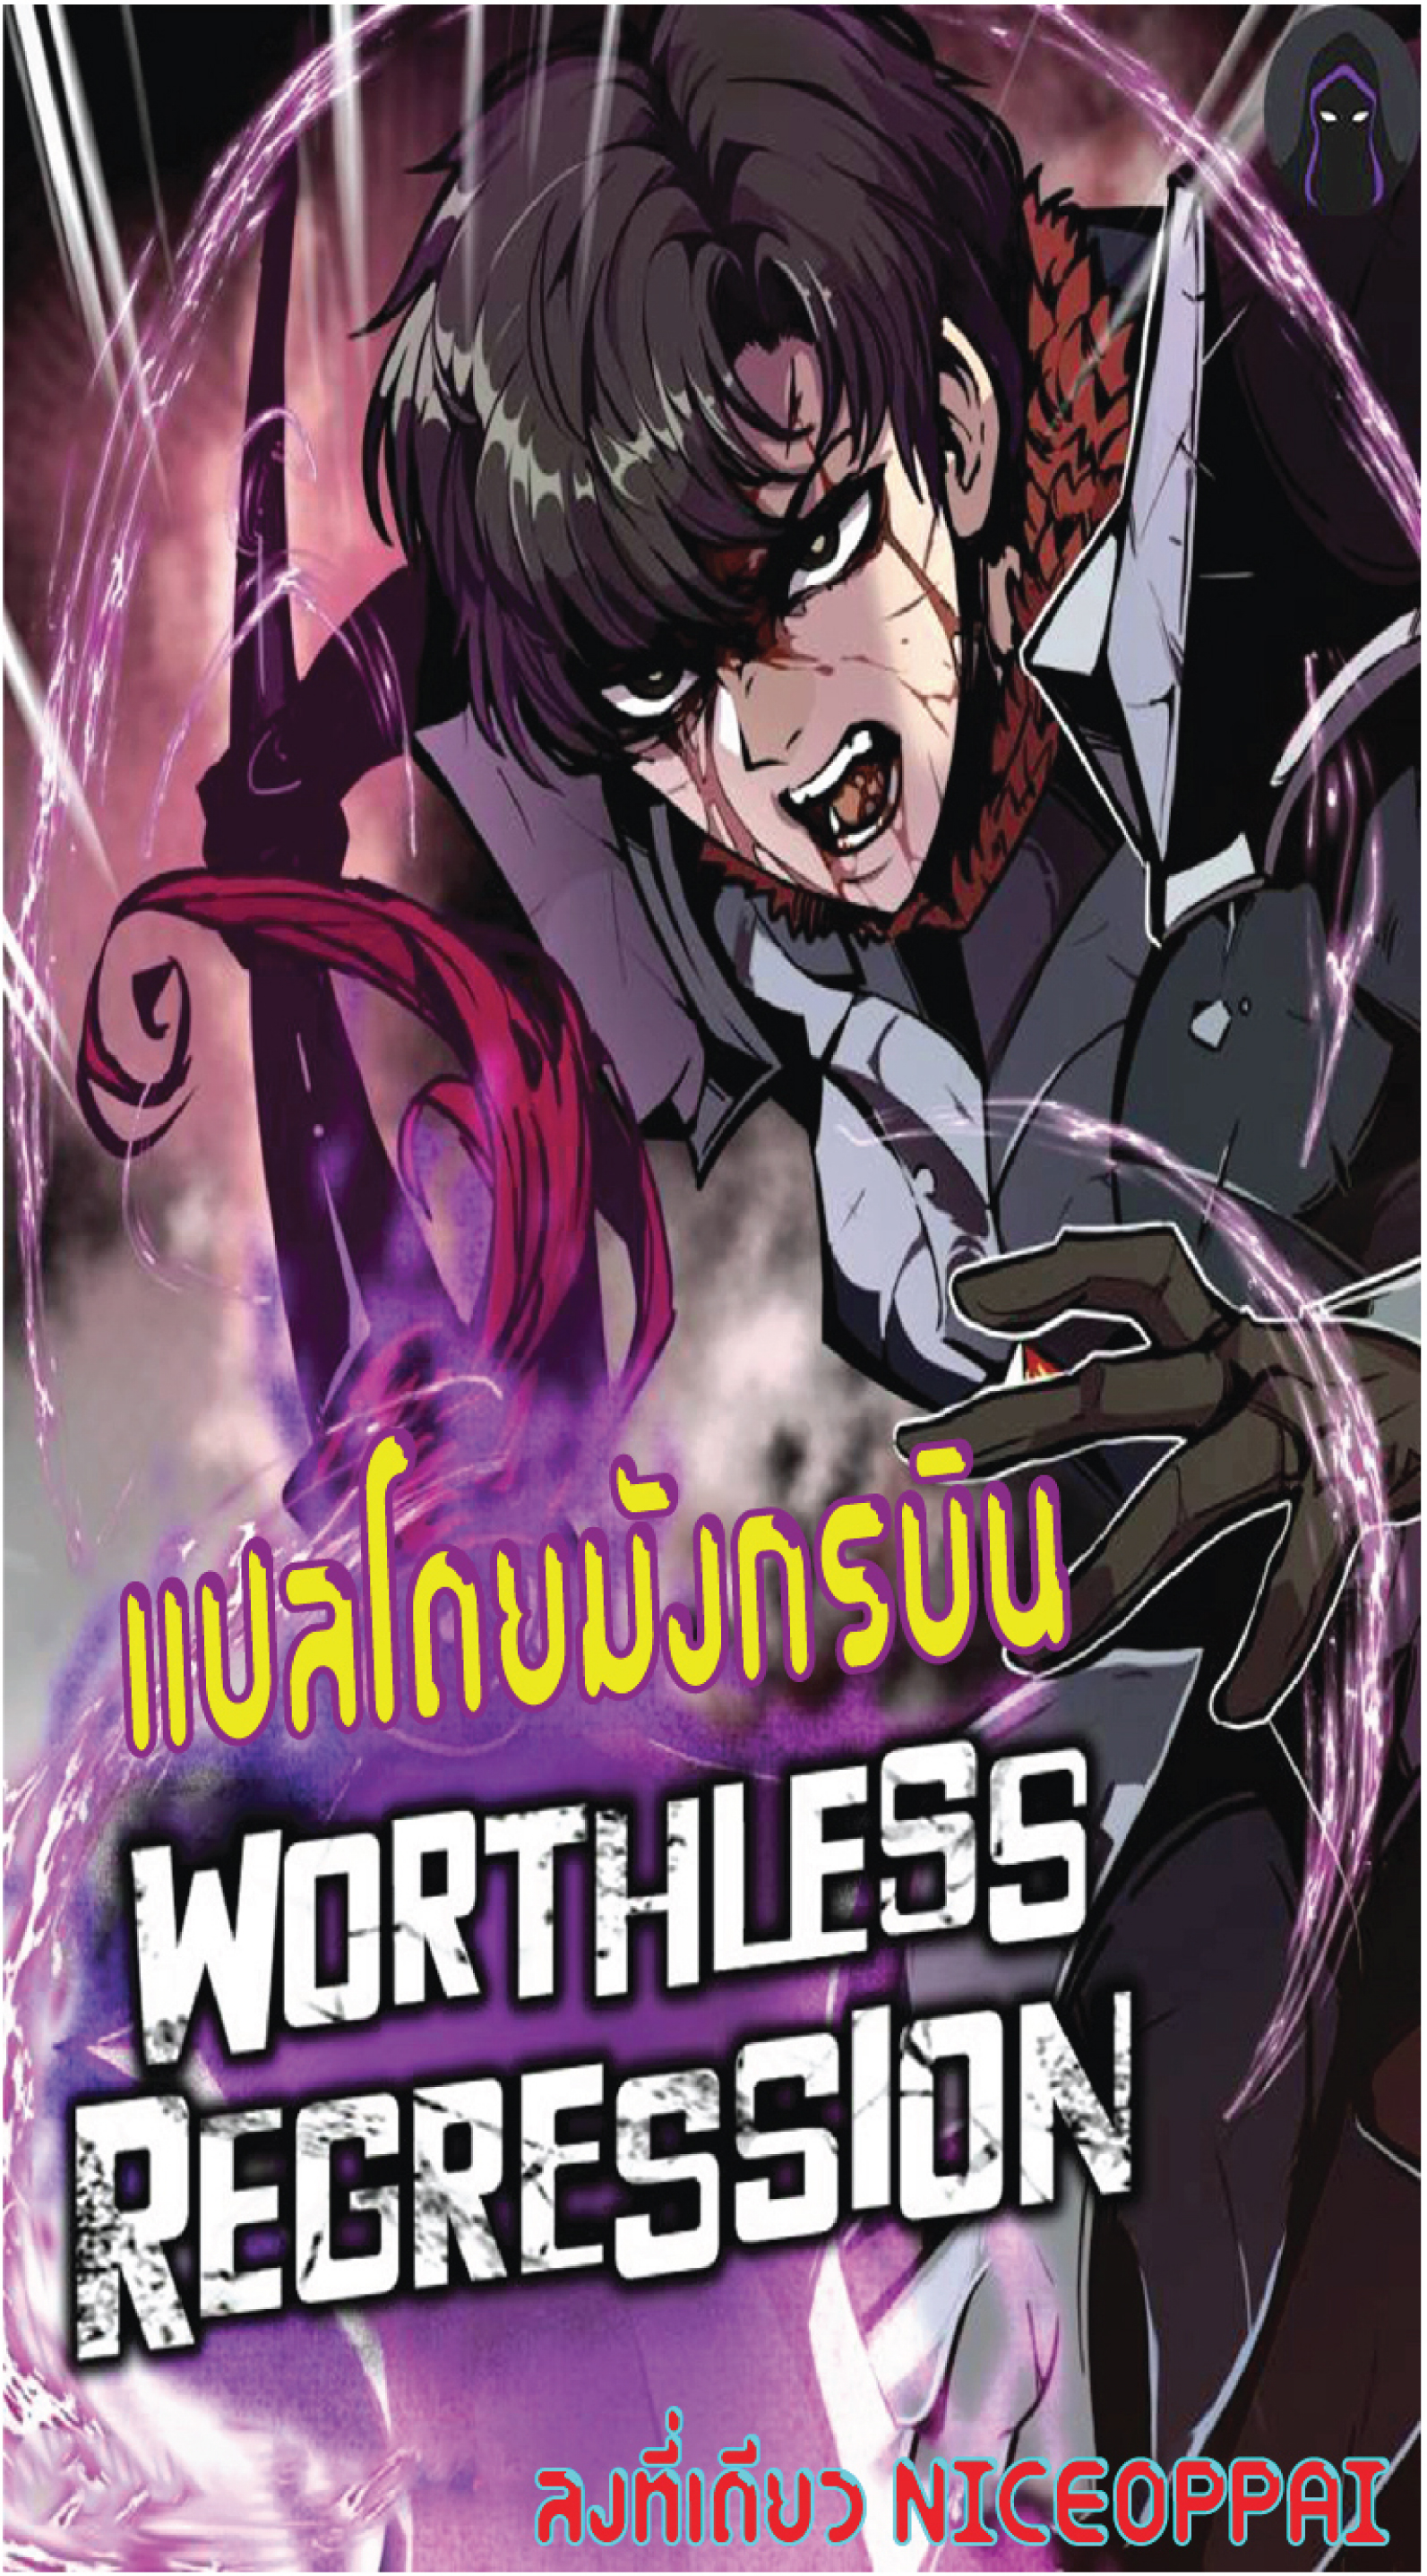 Worthless Regression 33 01